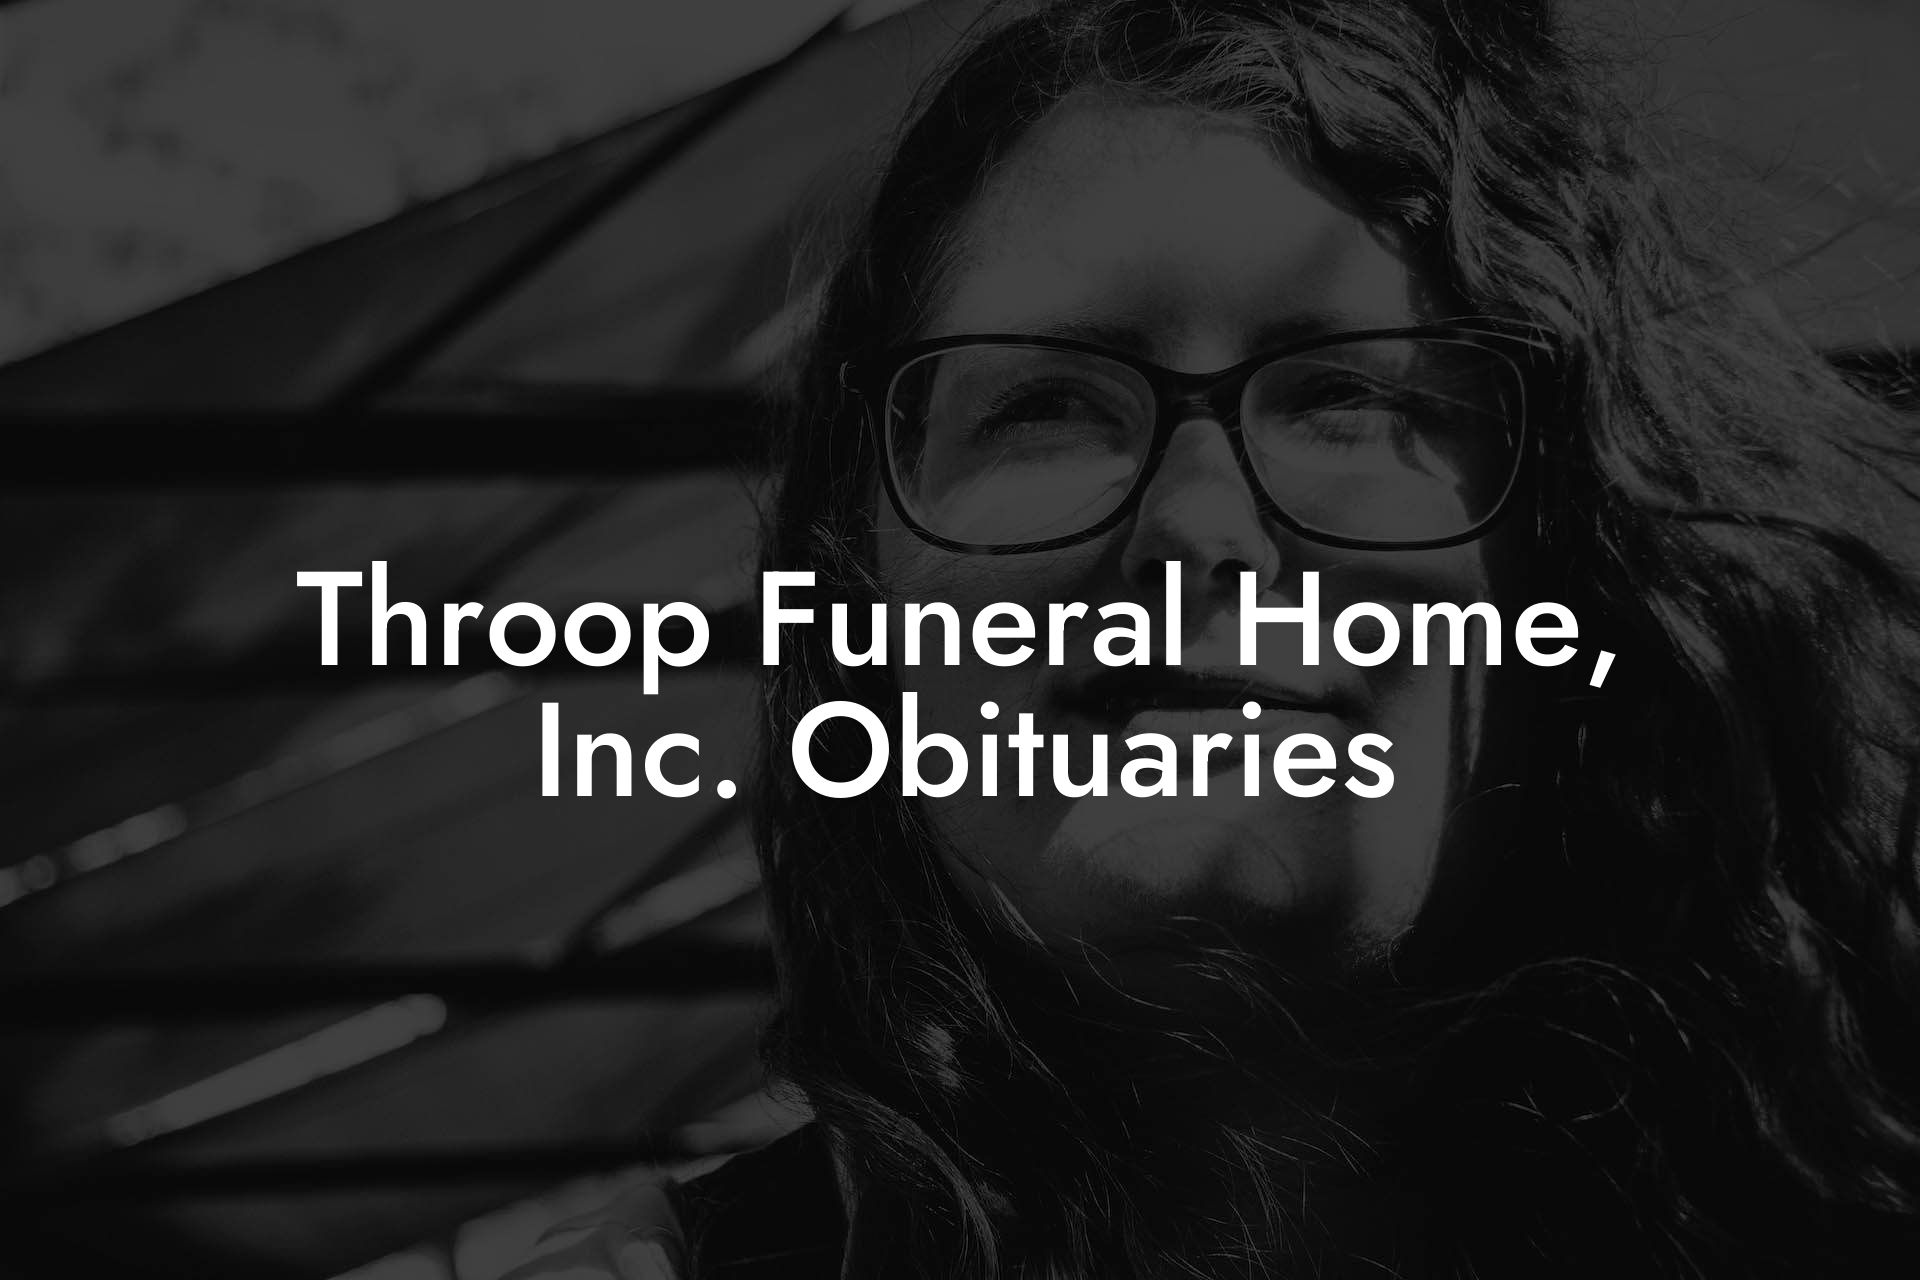 Throop Funeral Home, Inc. Obituaries